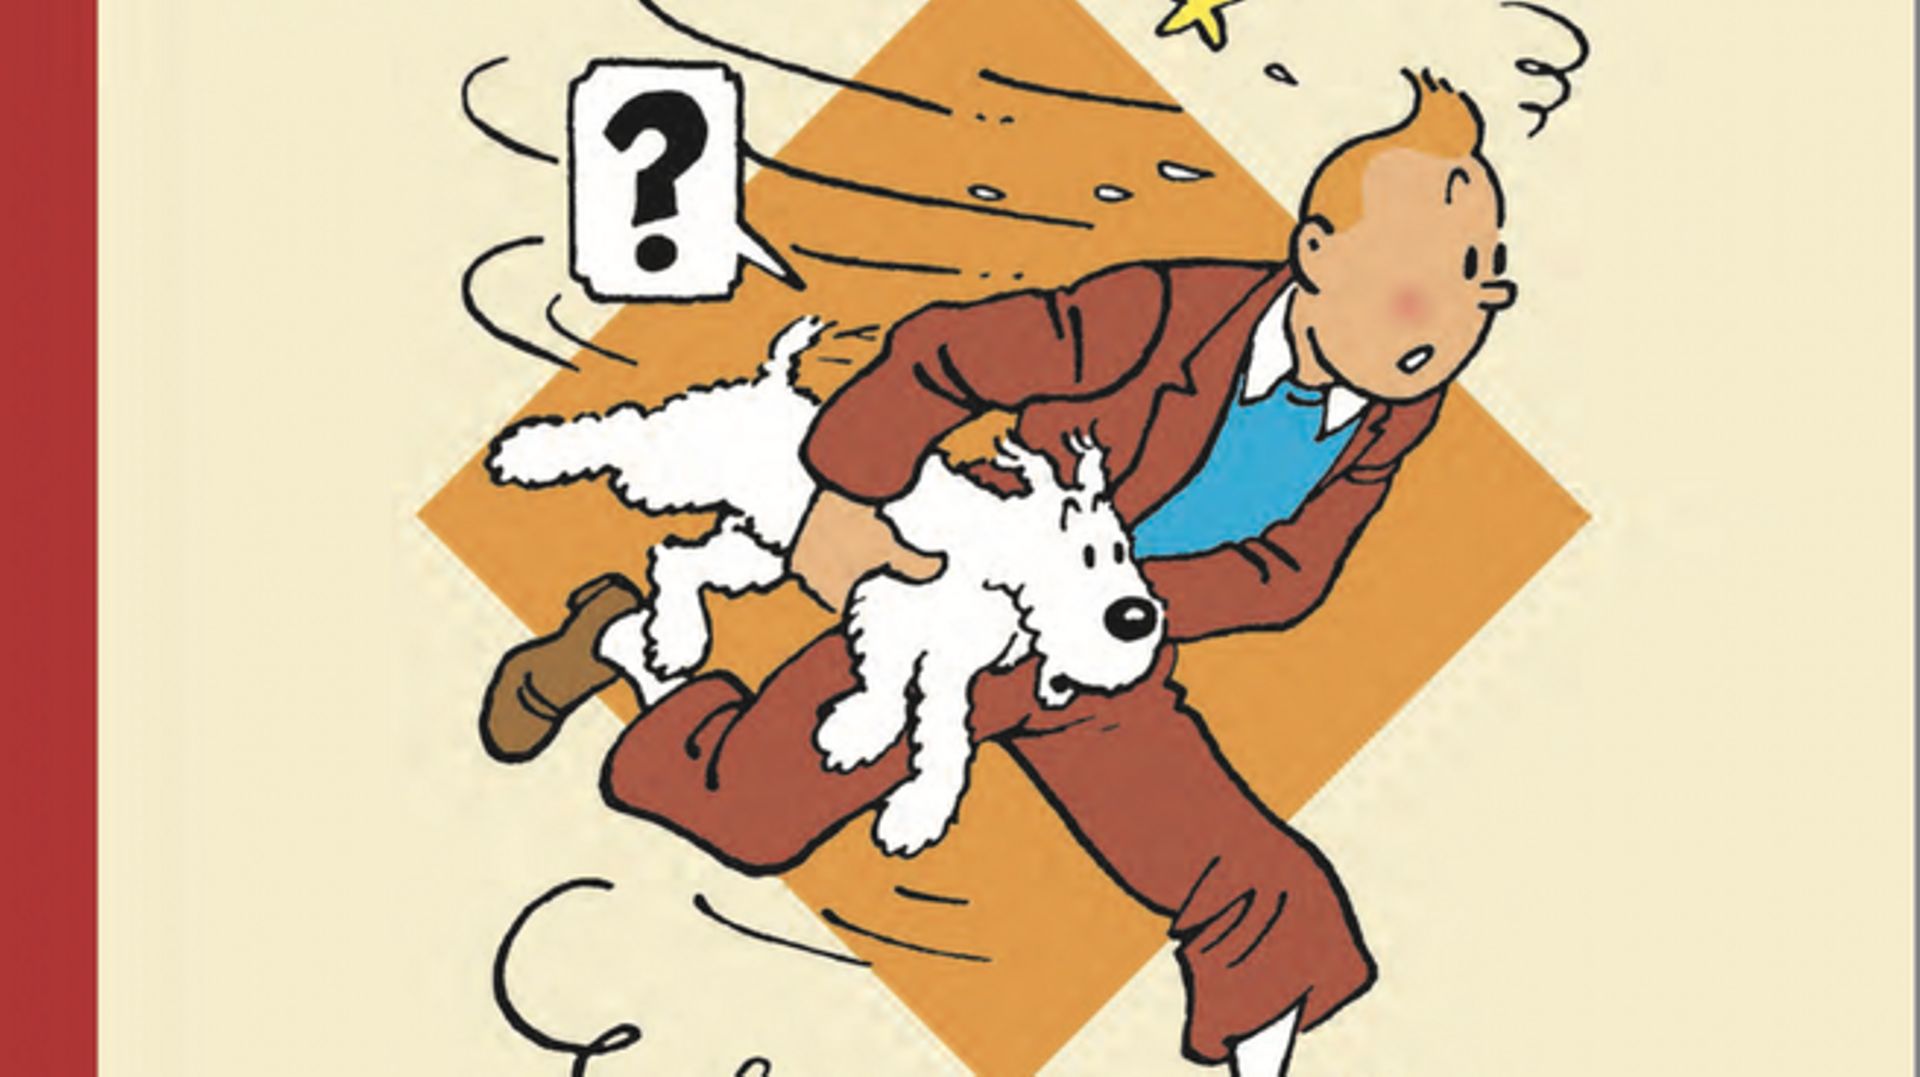 Journal Tintin, 70 ans … entre 7 et 77 